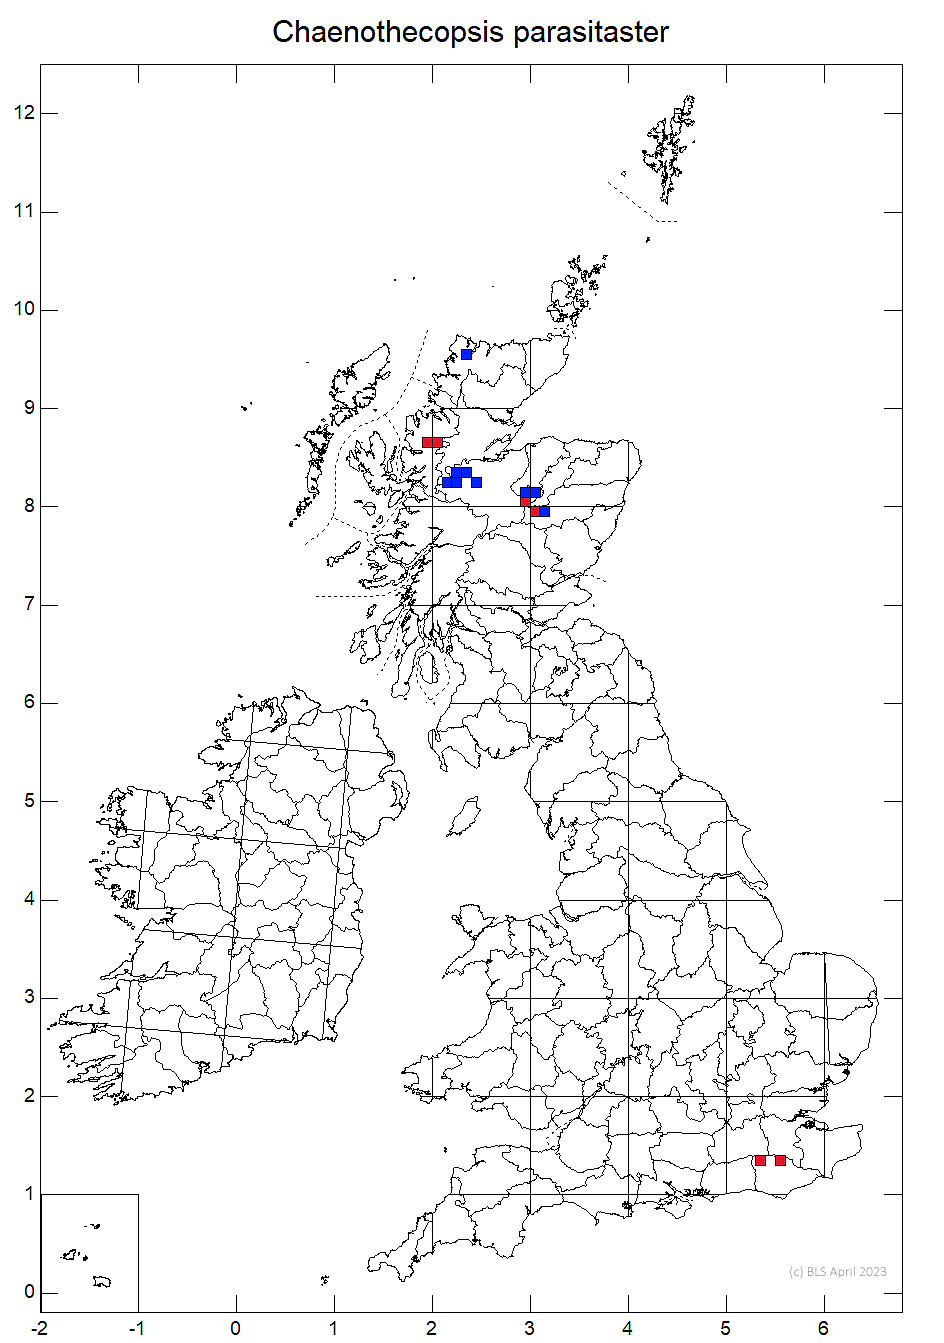 Chaenothecopsis parasitaster 10km sq distribution map